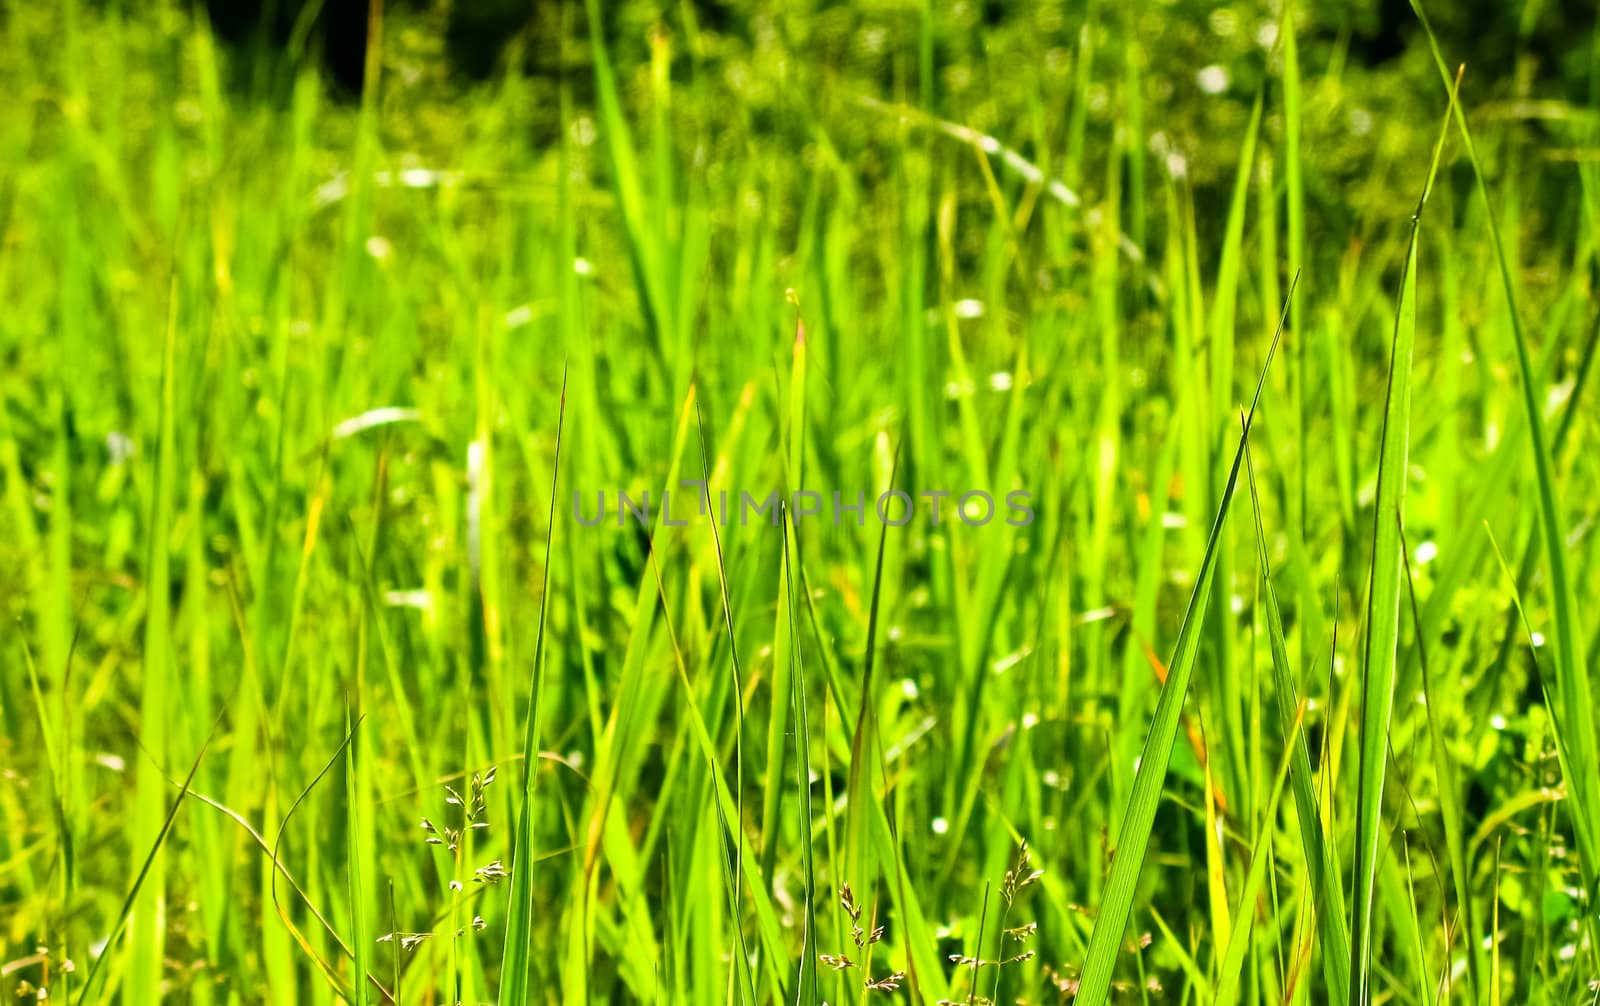 fresh spring green grass background